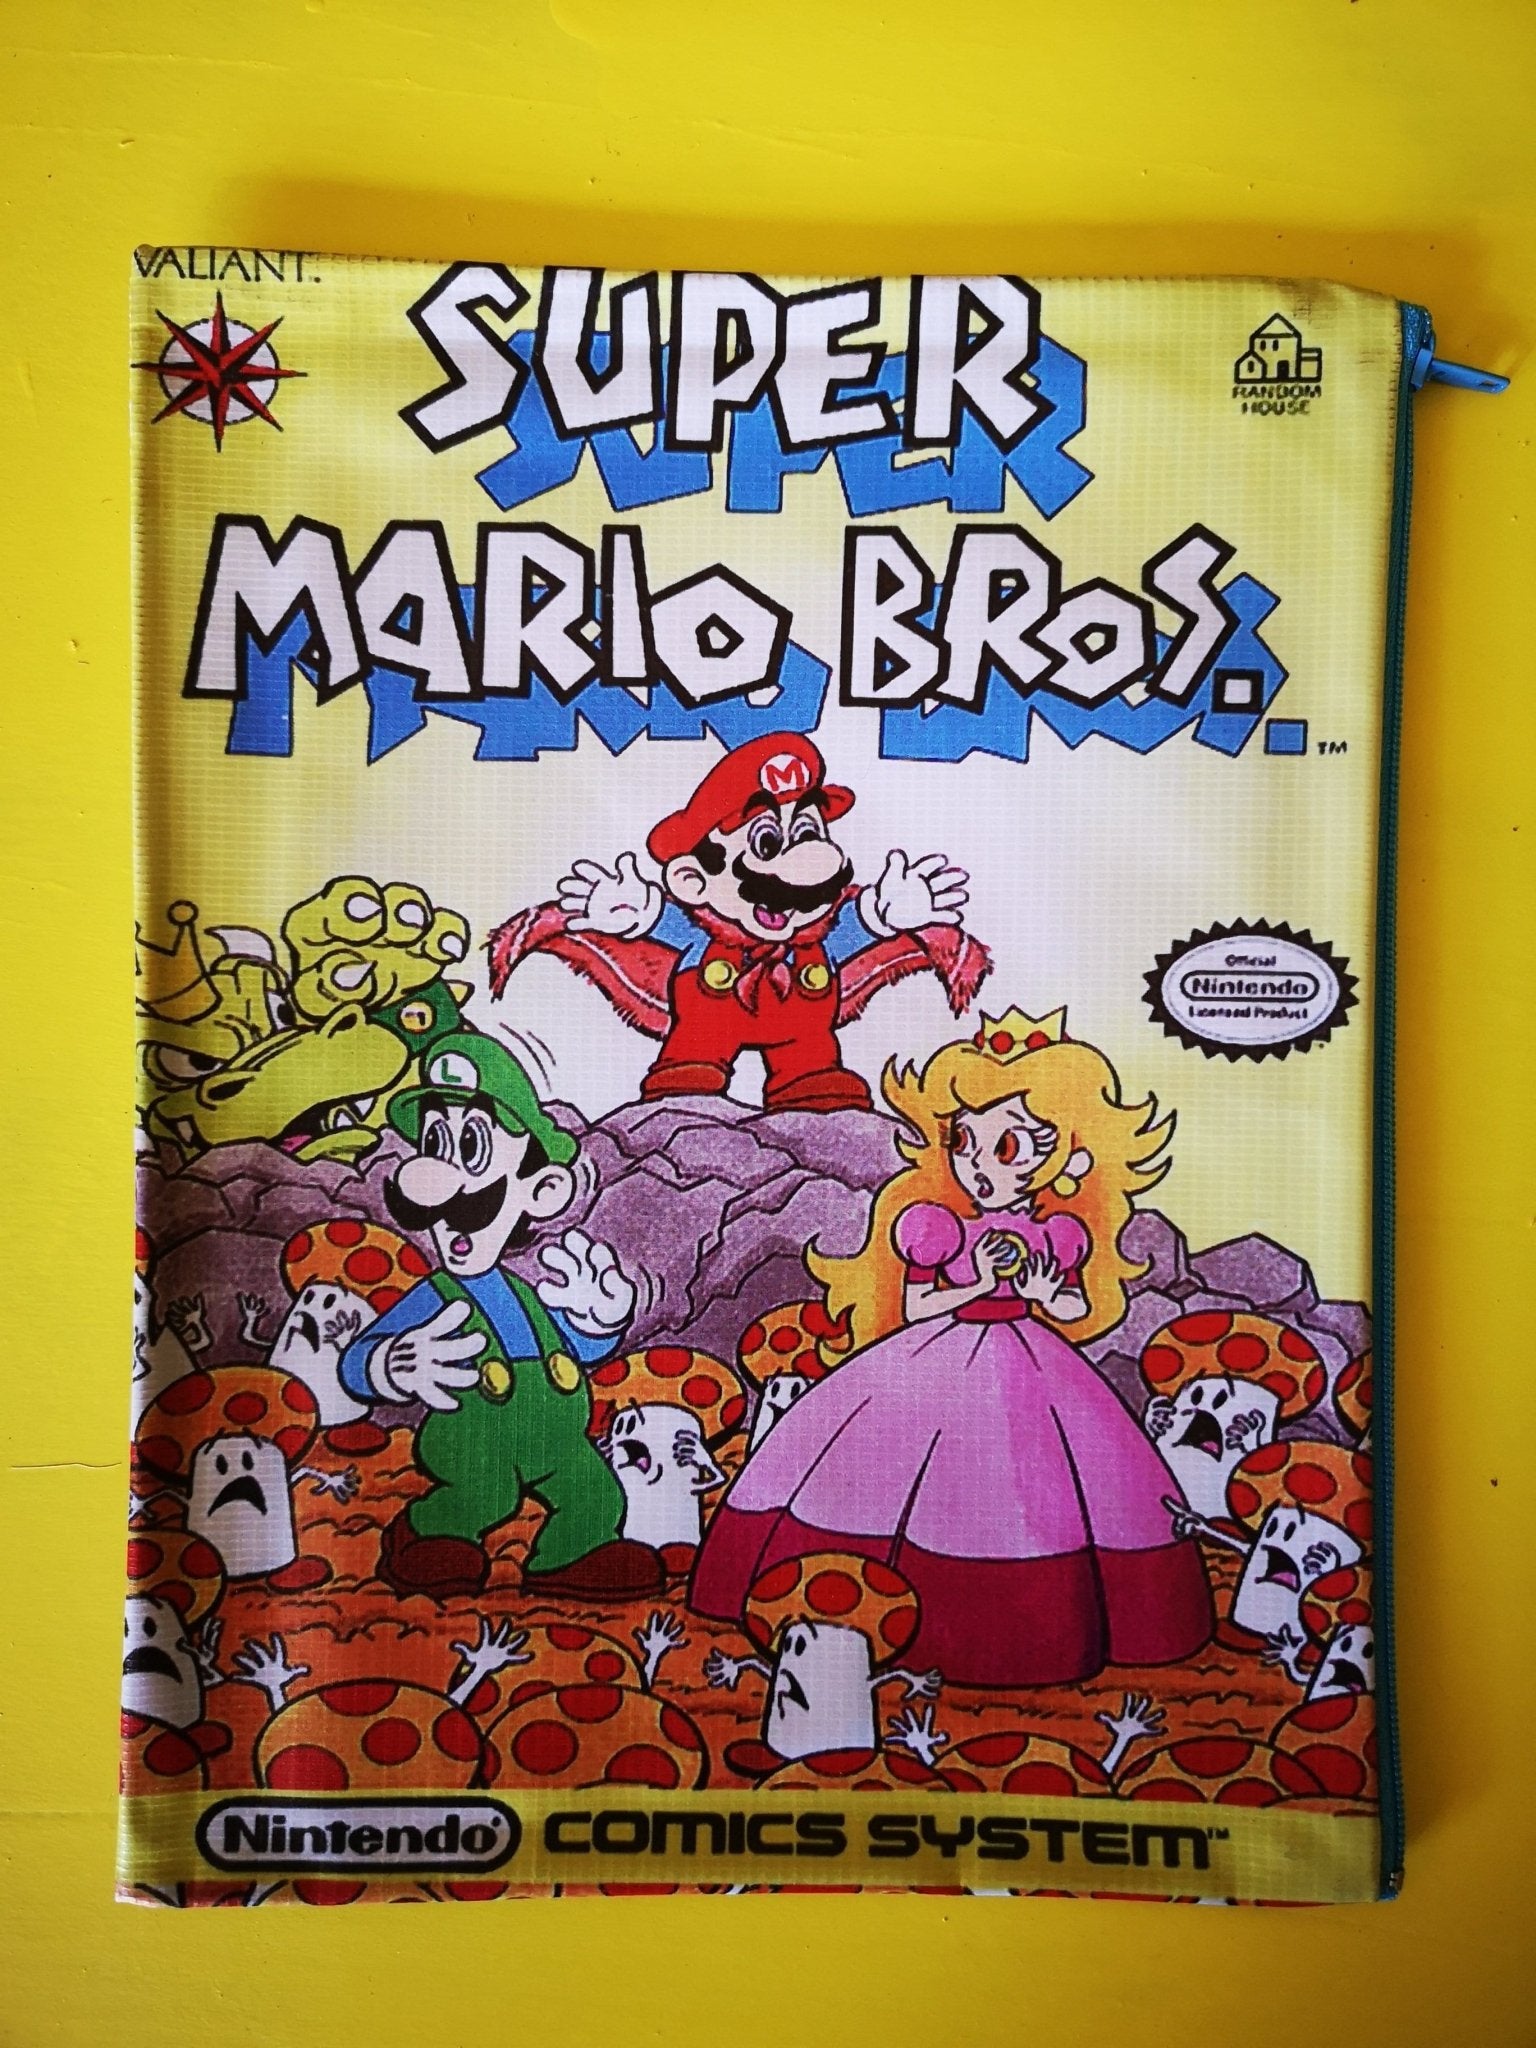 Super Mario Bros cartoon cover clutch